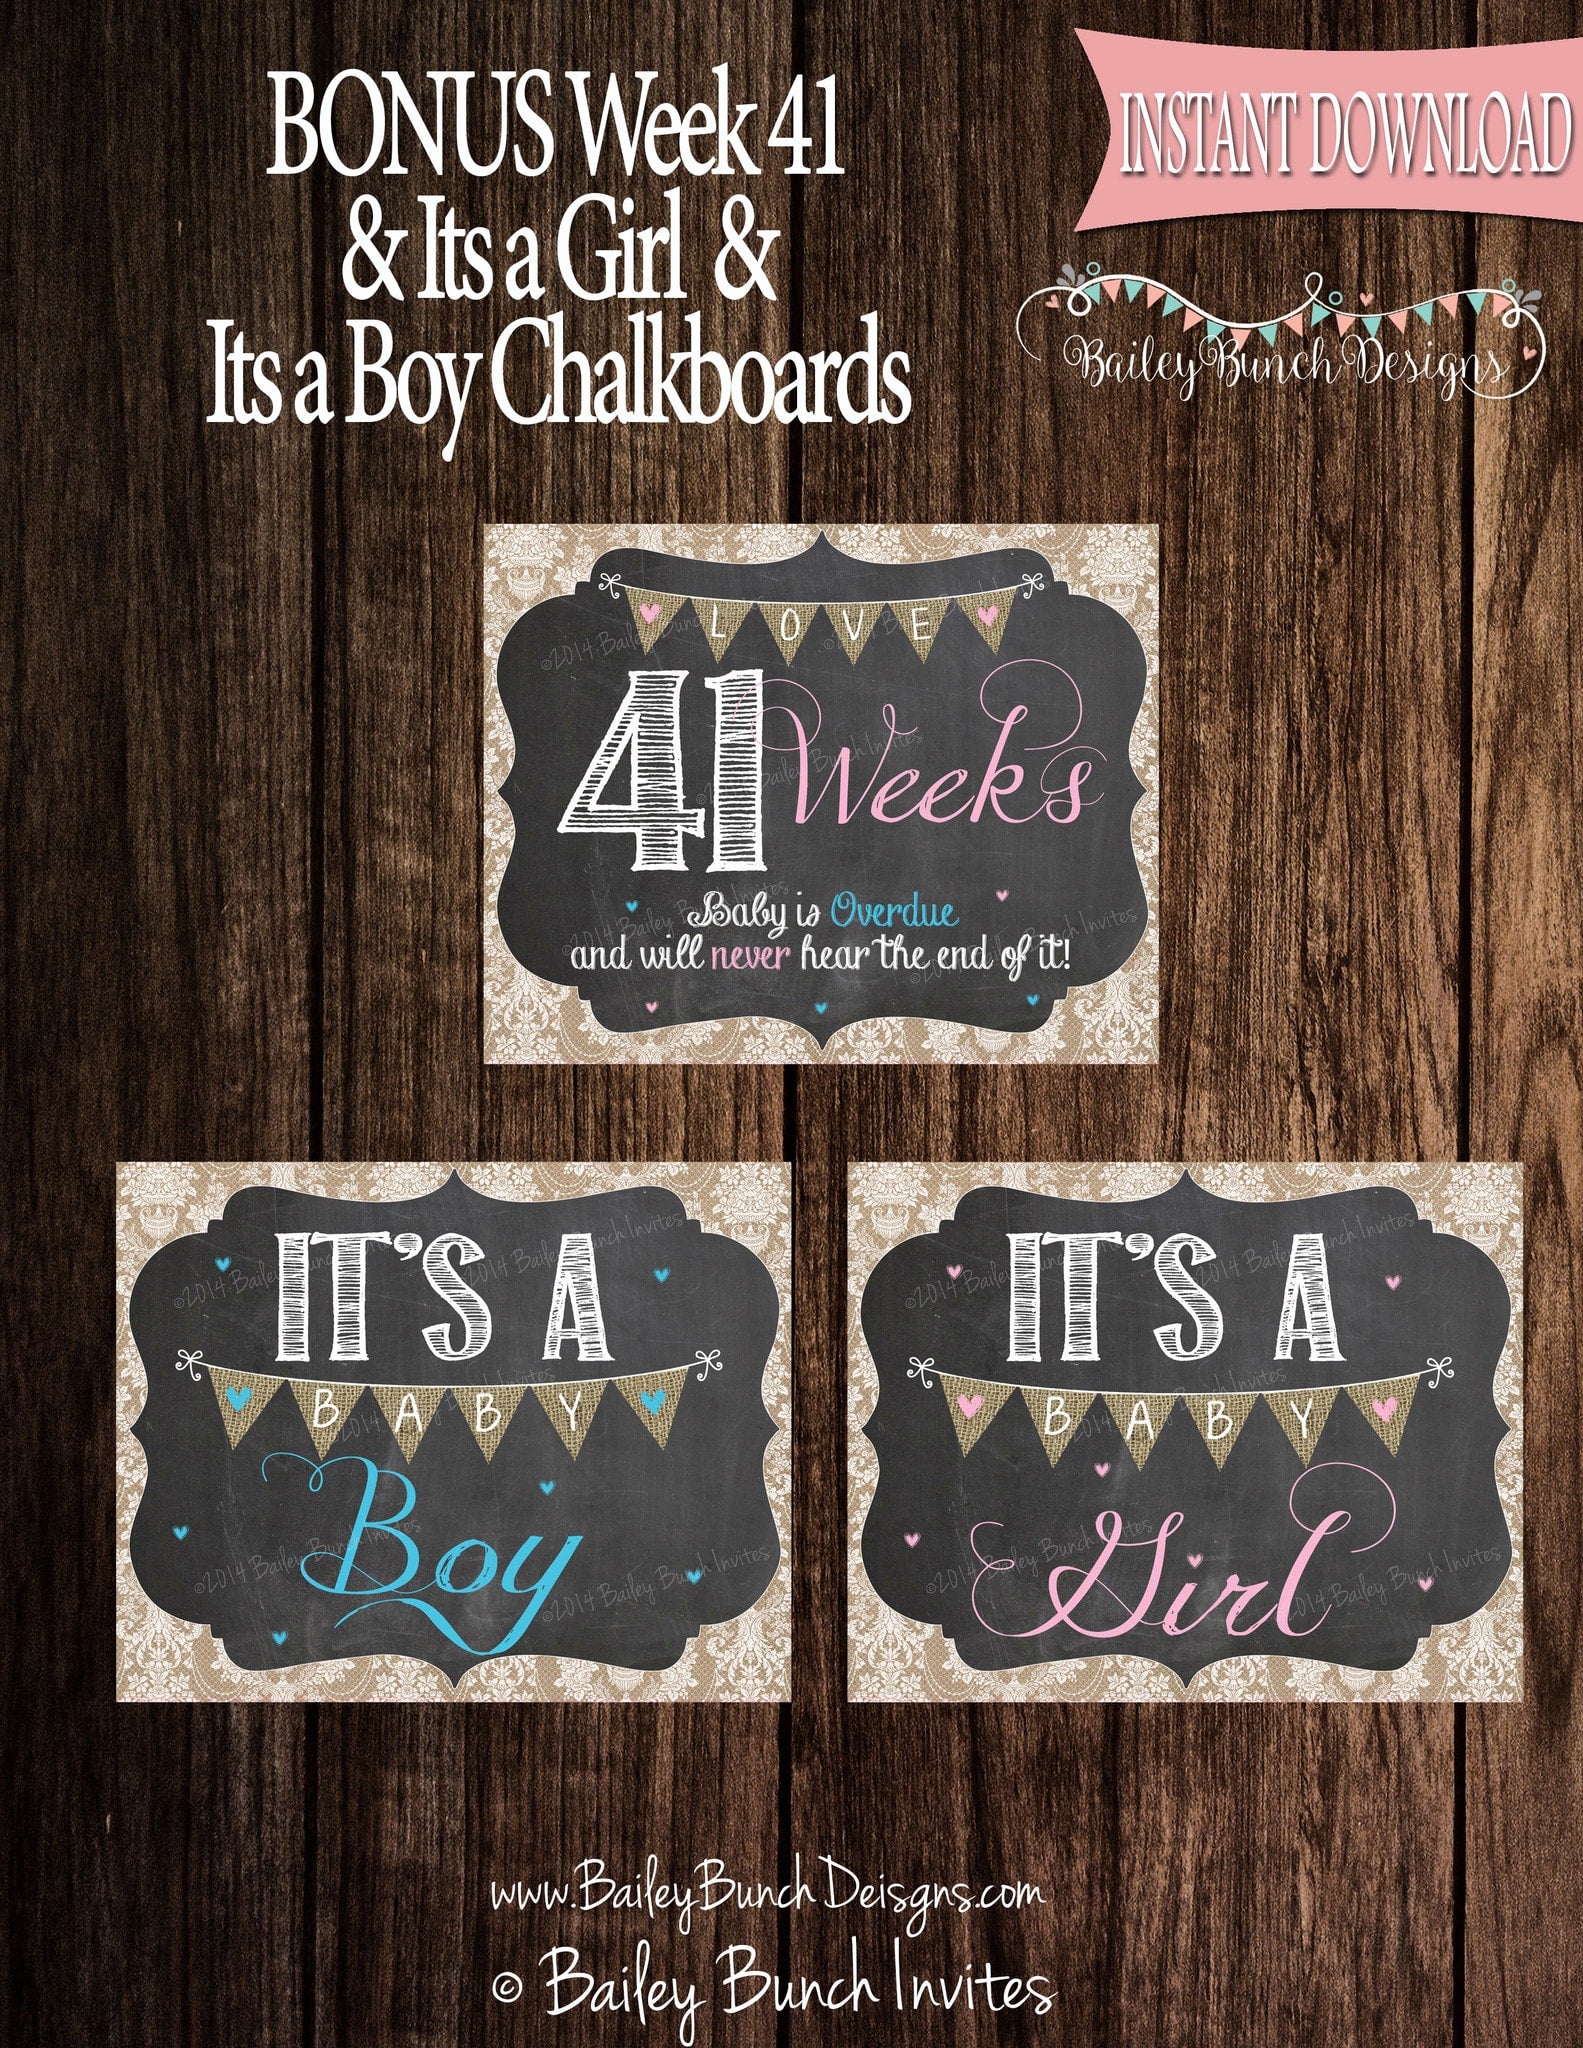 Tie Breaker Chalkboard Pregnancy Announcement - Set of 3 Printable Photo  Props / Baby Announcement / Chalkboard Signs / Tie Breaker Coming